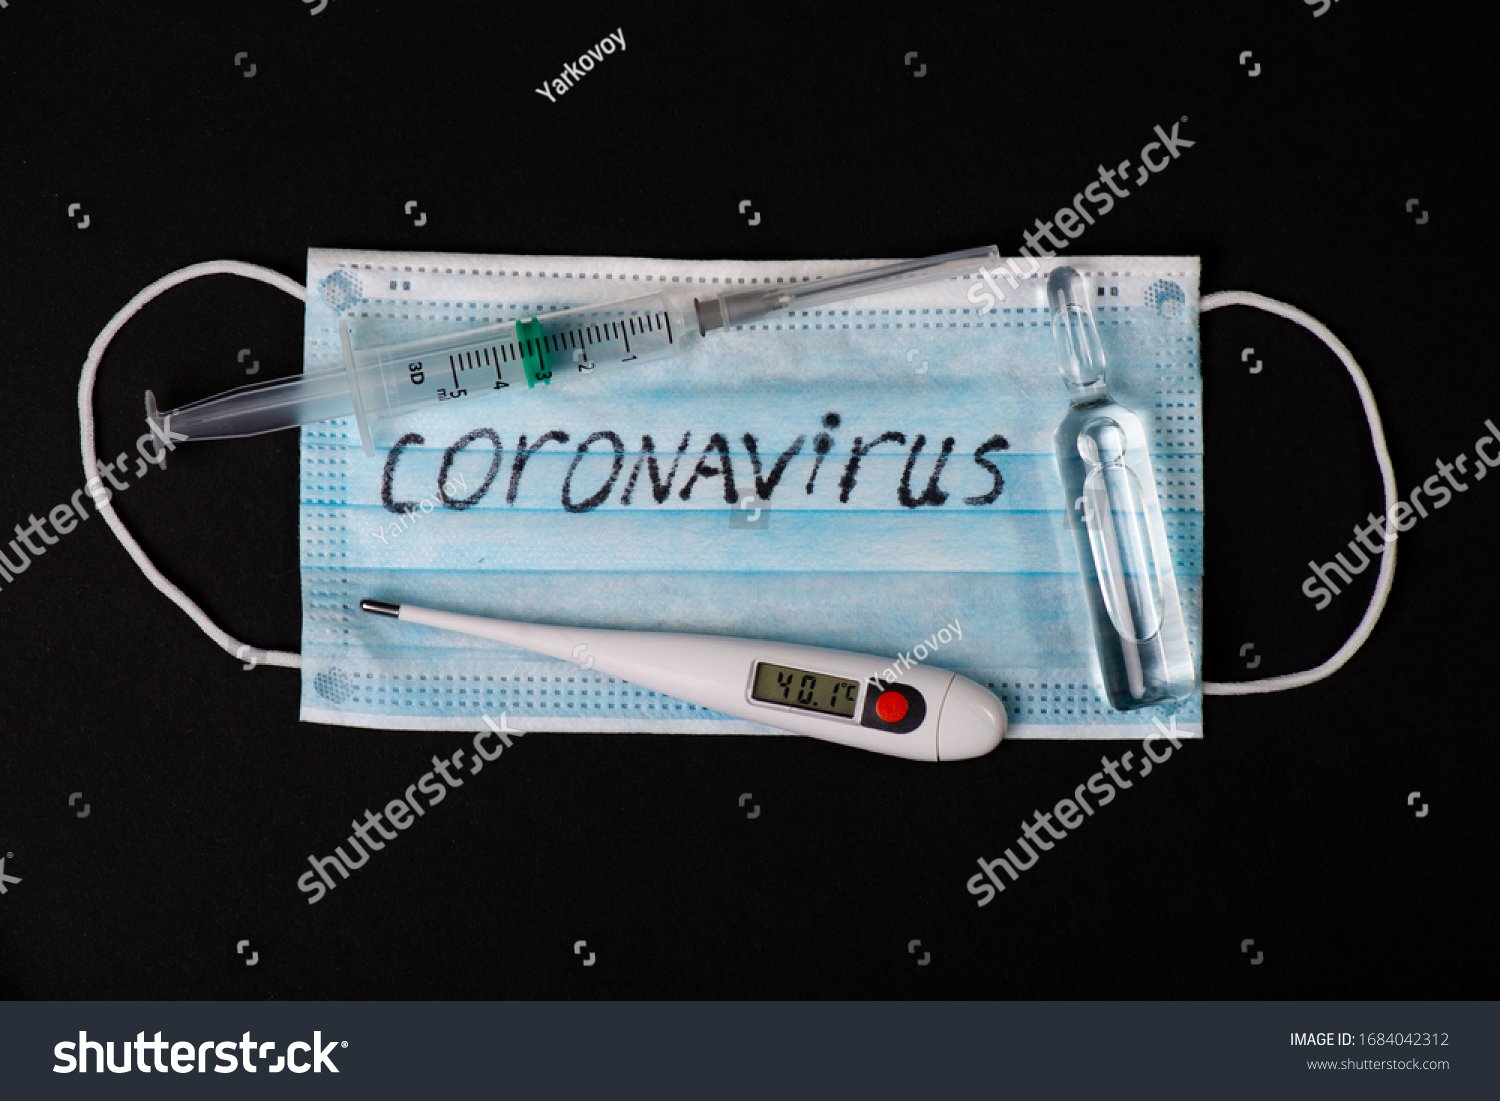 Panic Covid-19 Coronavirus outbreak concept. Coronavirus protective surgical mask on black background #1684042312